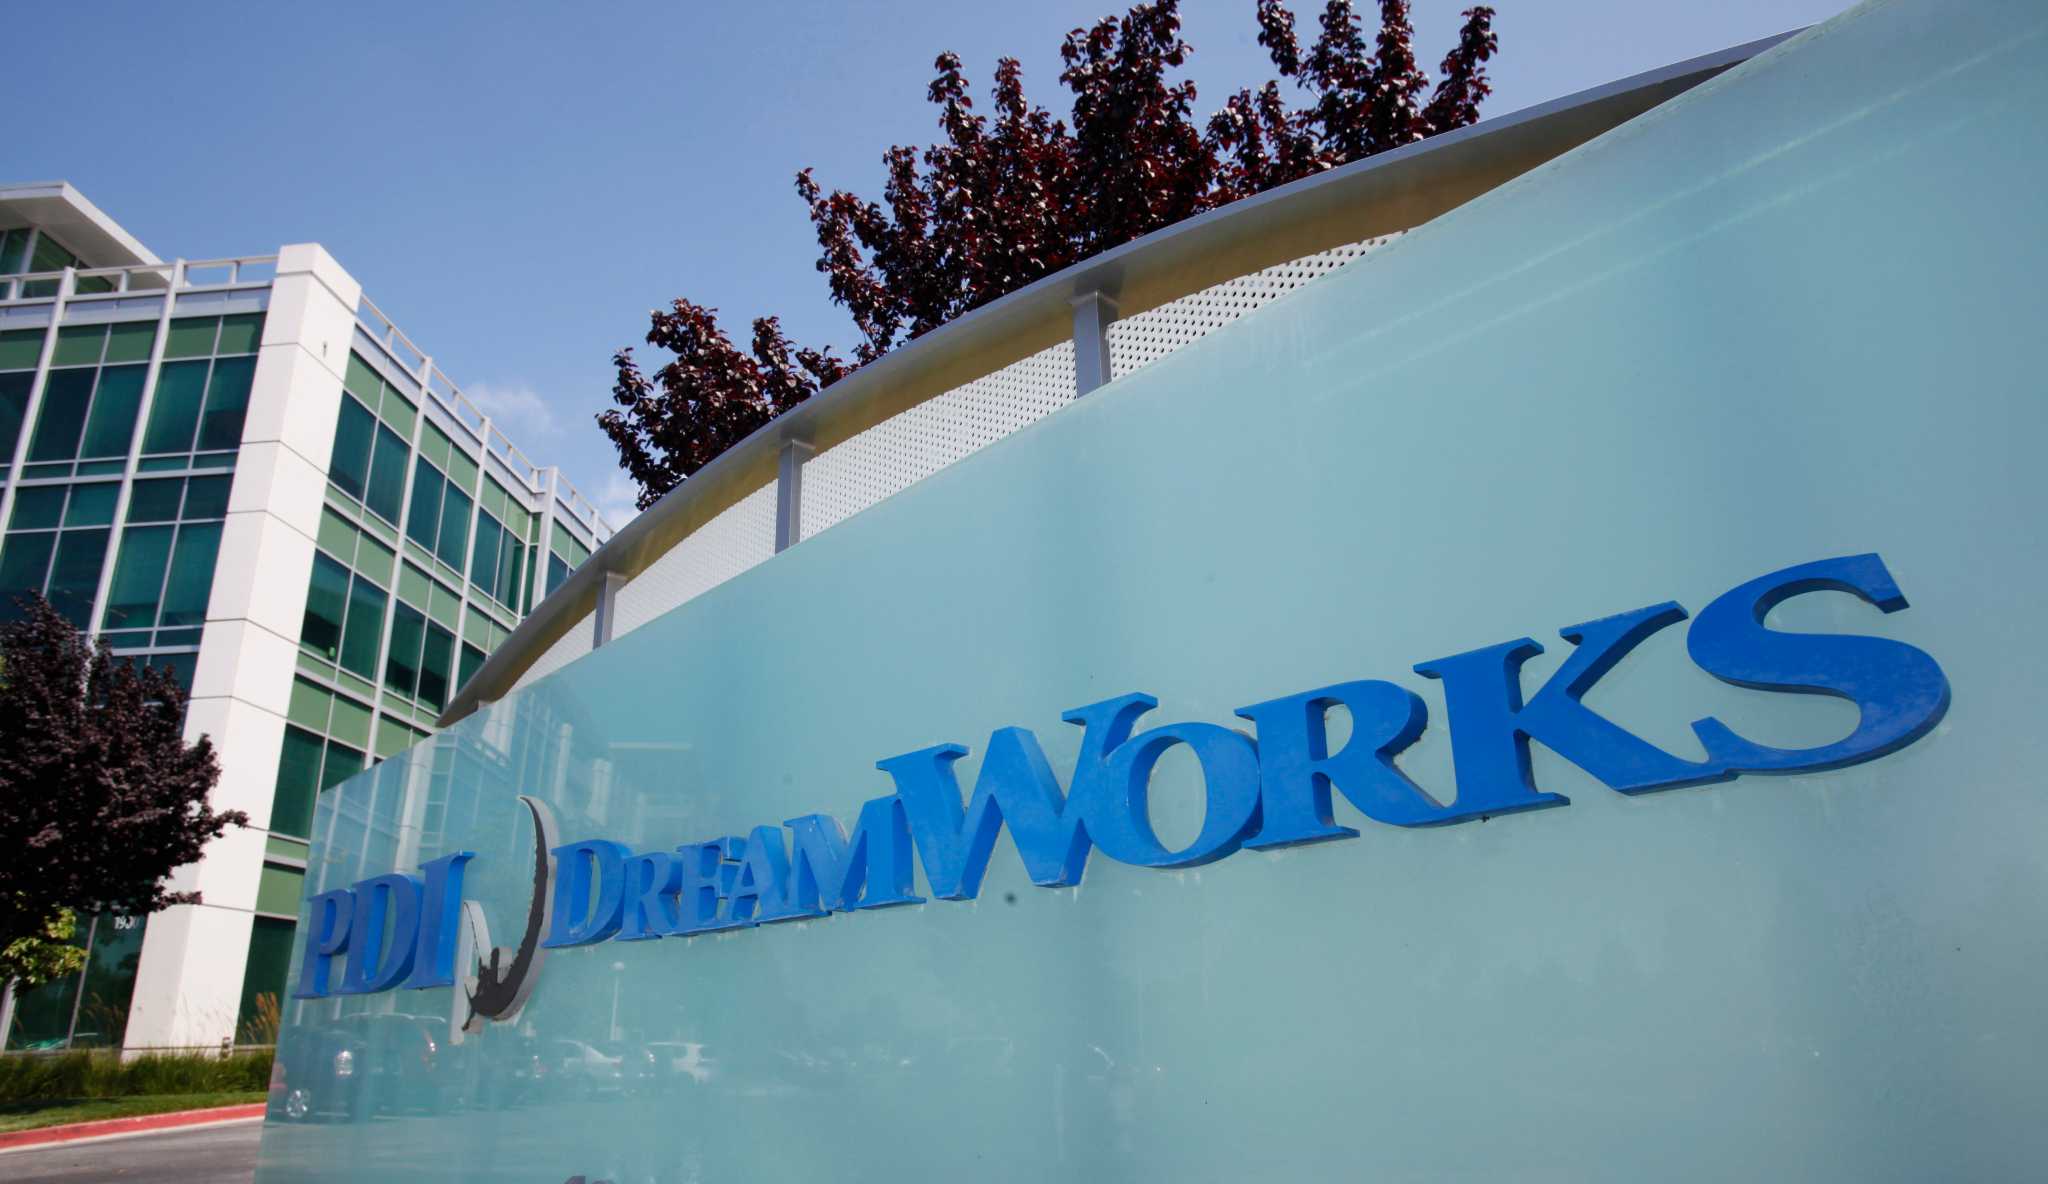 PDI DreamWorks Logo - DreamWorks Animation to cut 500 jobs, PDI gets hit hard - SFGate